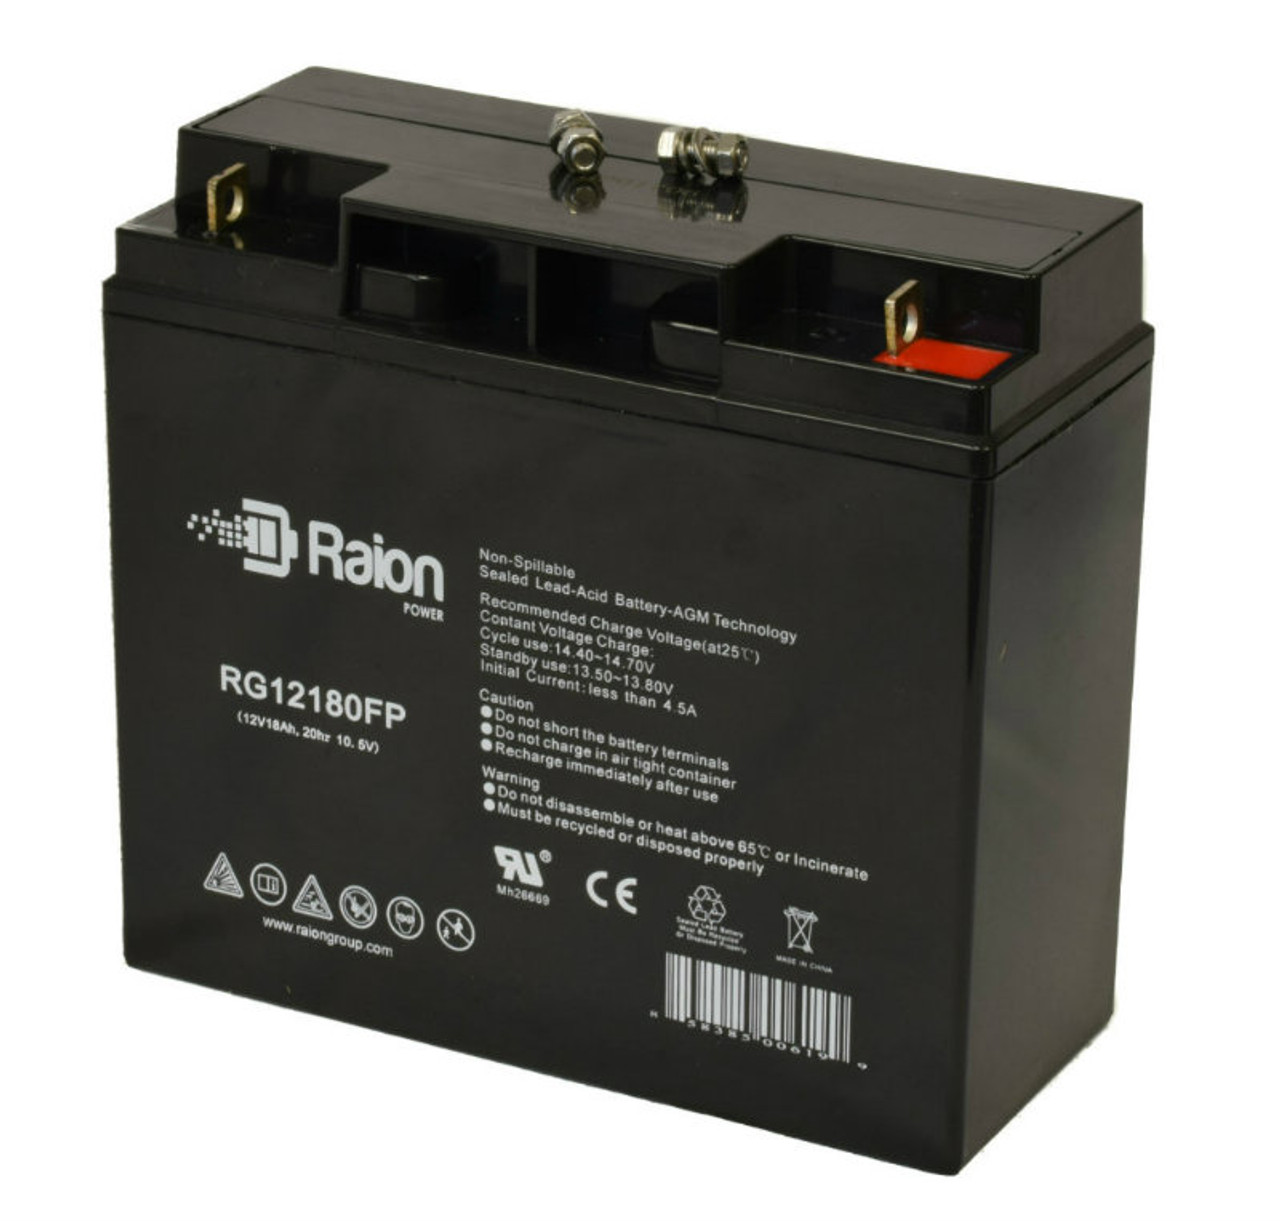 Raion Power RG12180FP 12V 18Ah Lead Acid Battery for Wagan Tech 2454 (Power Dome EX 400W) Jump Starter